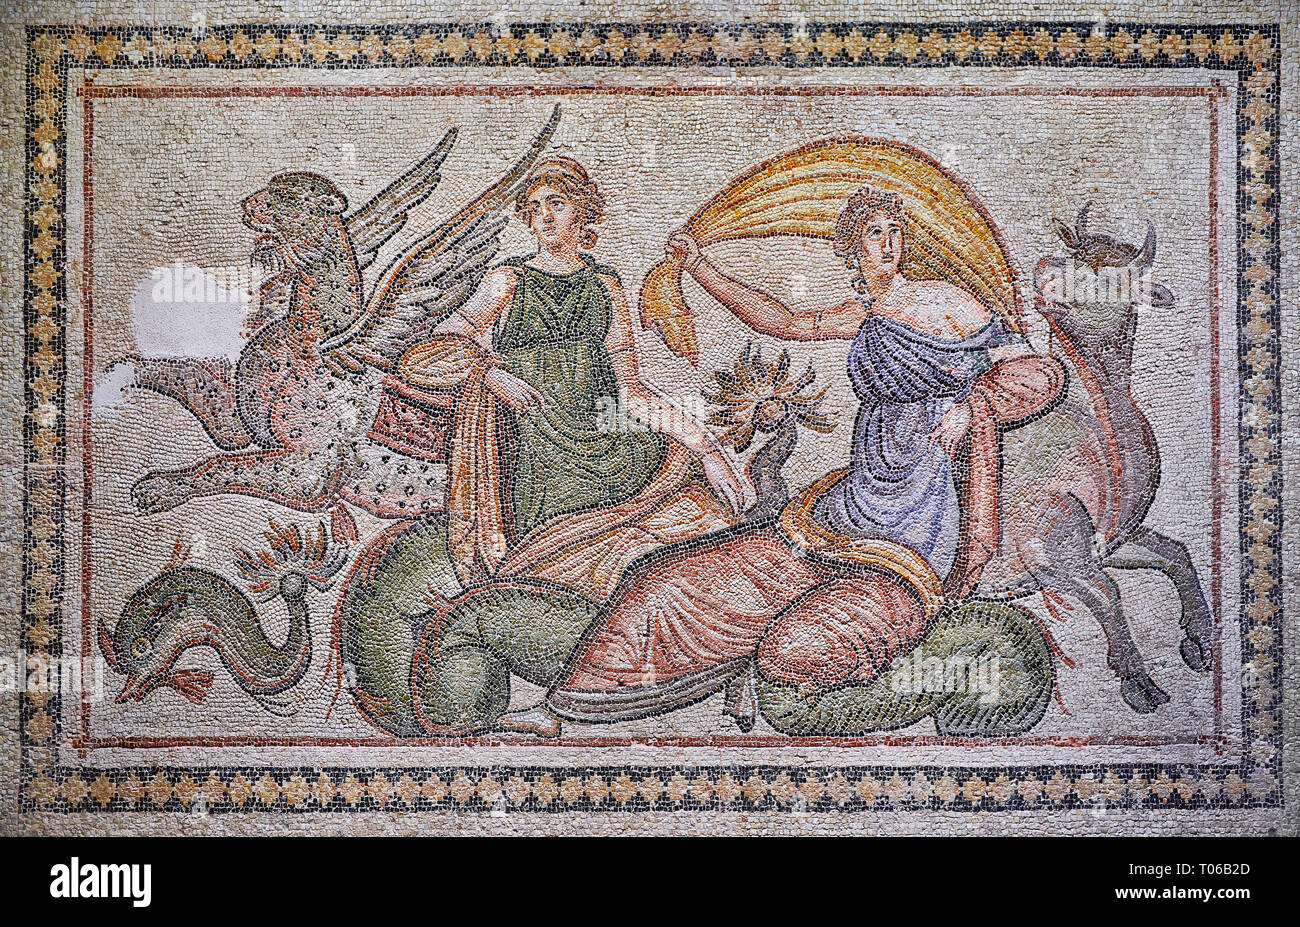 Römischer Mosaike - die Poseidon Mosaik. Poseidon Villa alten Zeugama, 2. - 3. nachchristlichen Jahrhundert. Das Zeugma Mosaic Museum, Gaziantep, Türkei. Stockfoto